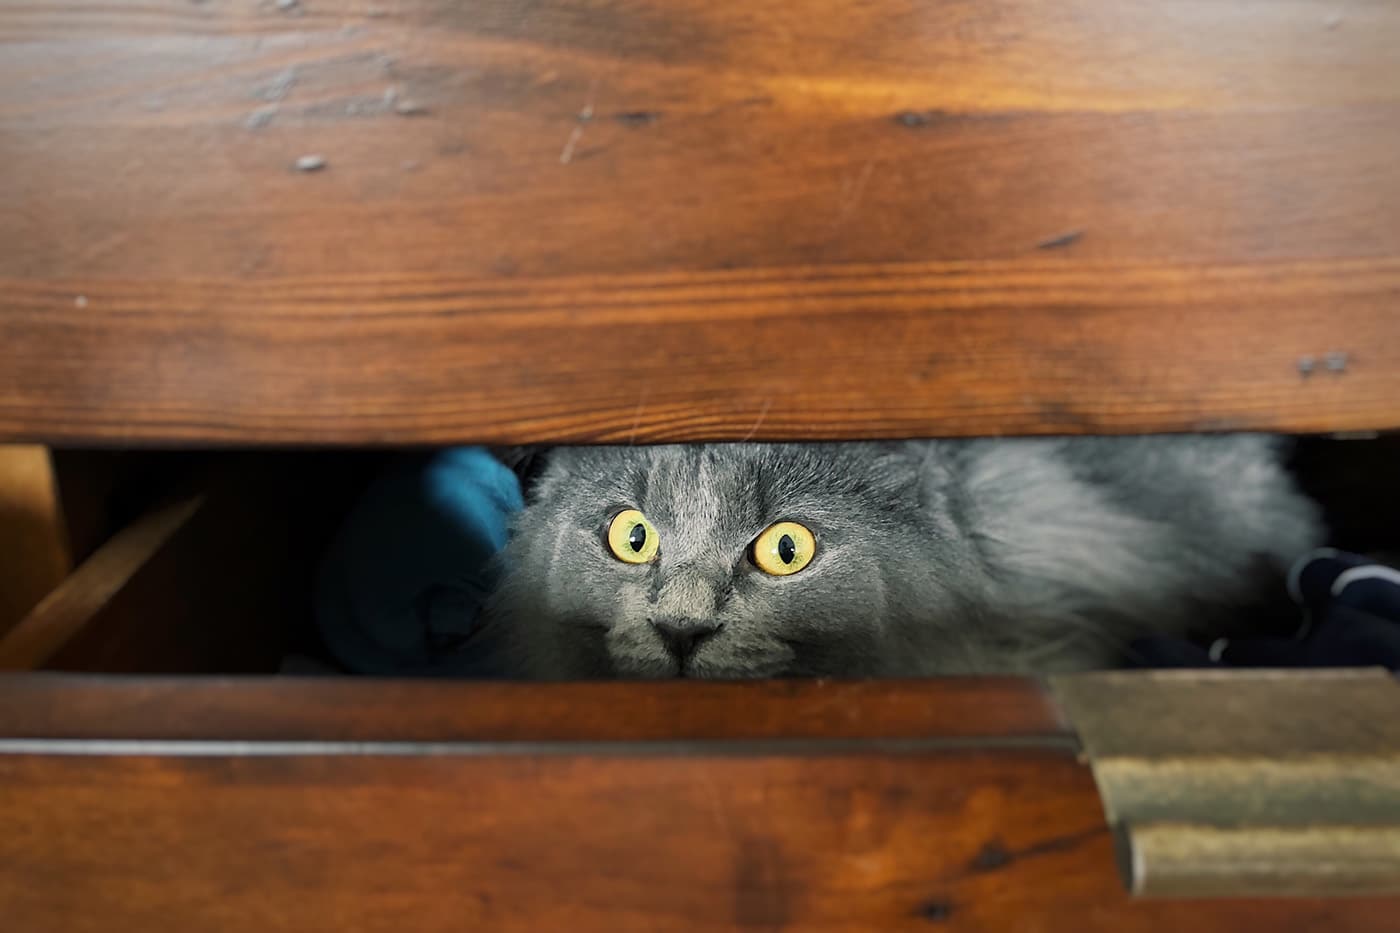 silly cat inside underwear drawer scared hiding 2022 11 14 06 19 14 utc